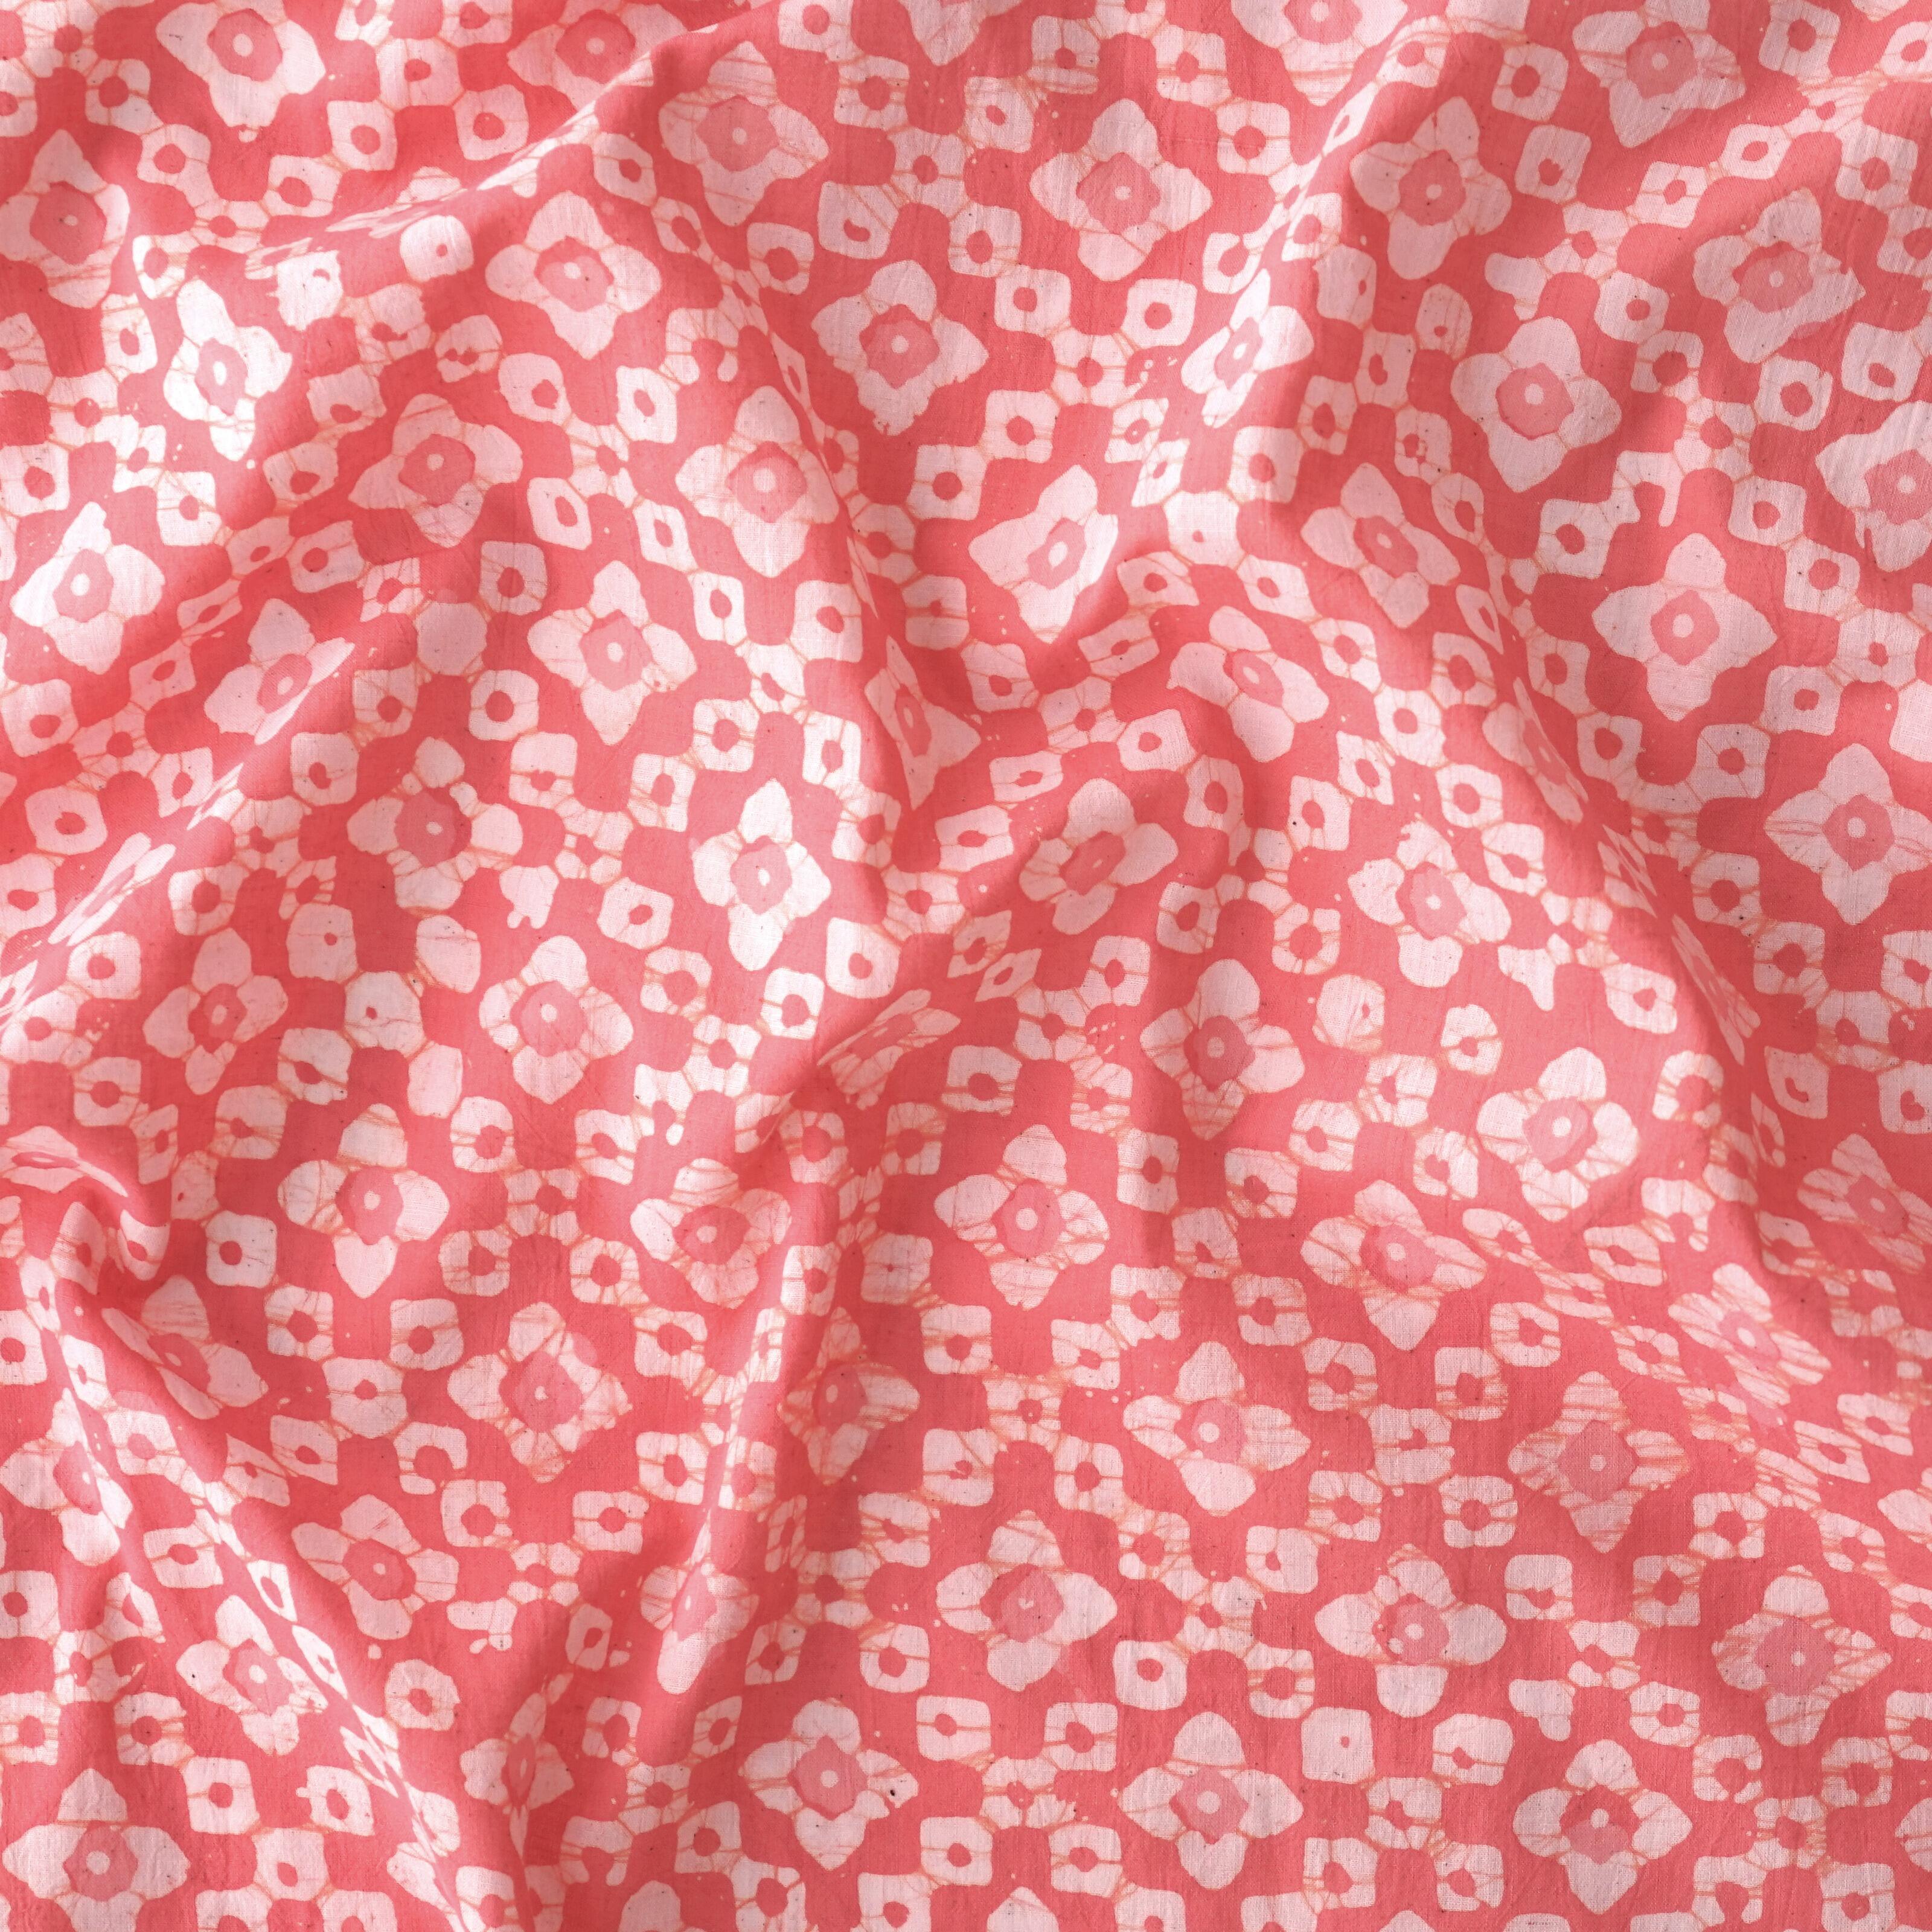 100% Block-Printed Batik Cotton Fabric From India - Alhambra Tiles Motif - Salmon Dye - Contrast